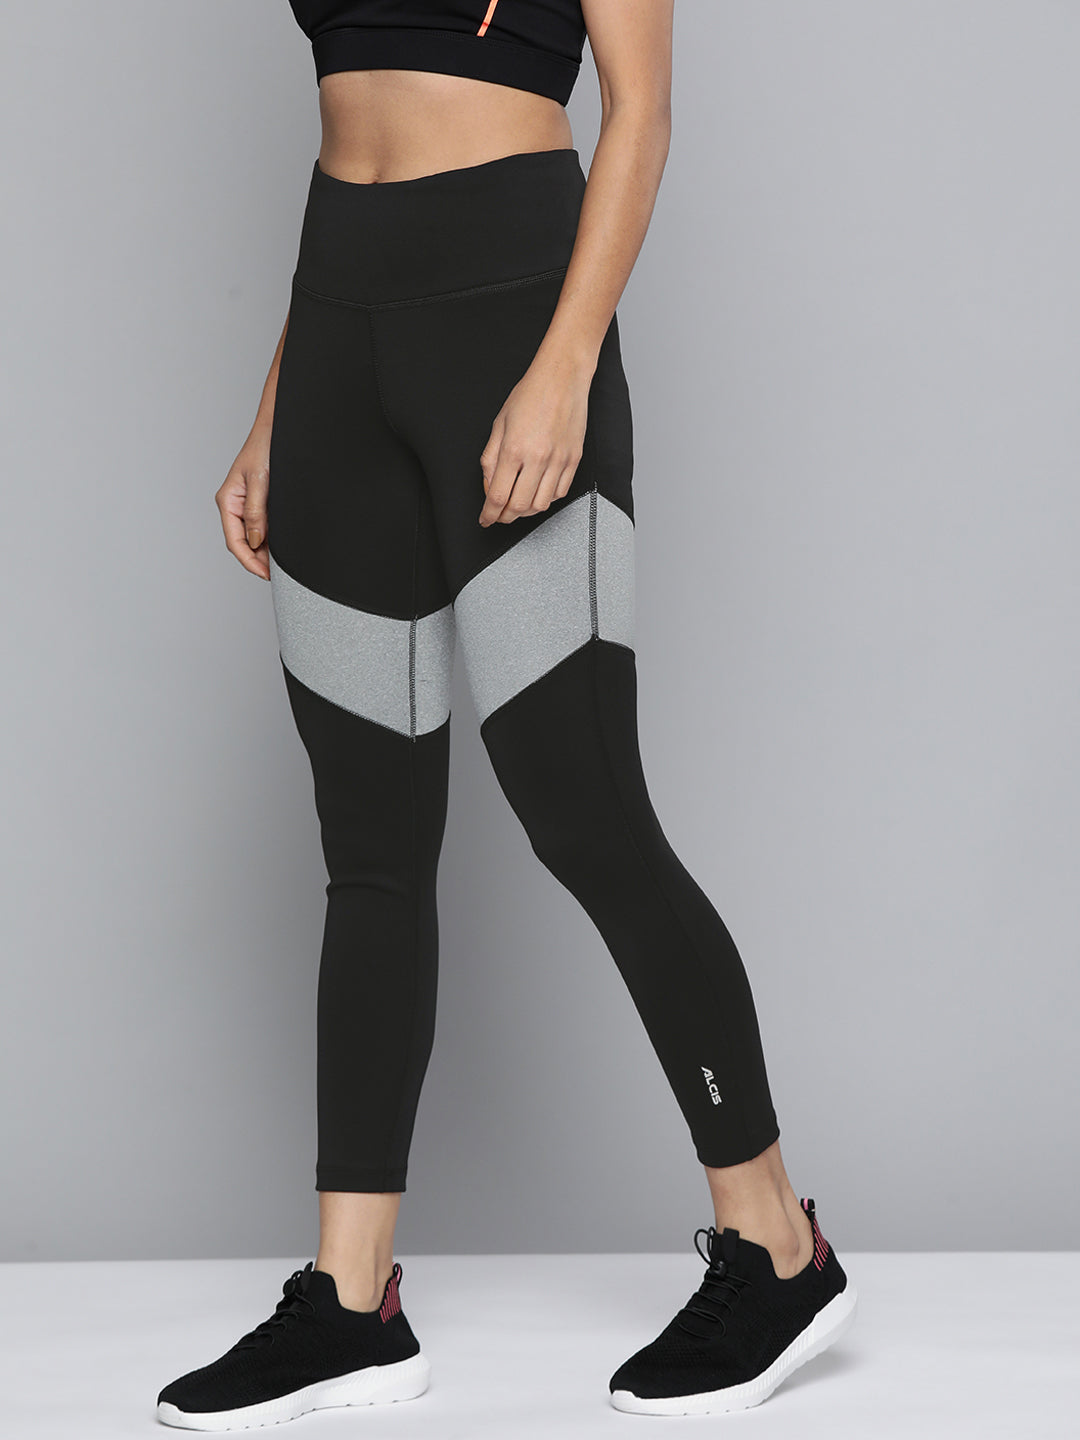 Alcis Women Black & Grey Colourblocked Cropped Sport Tights